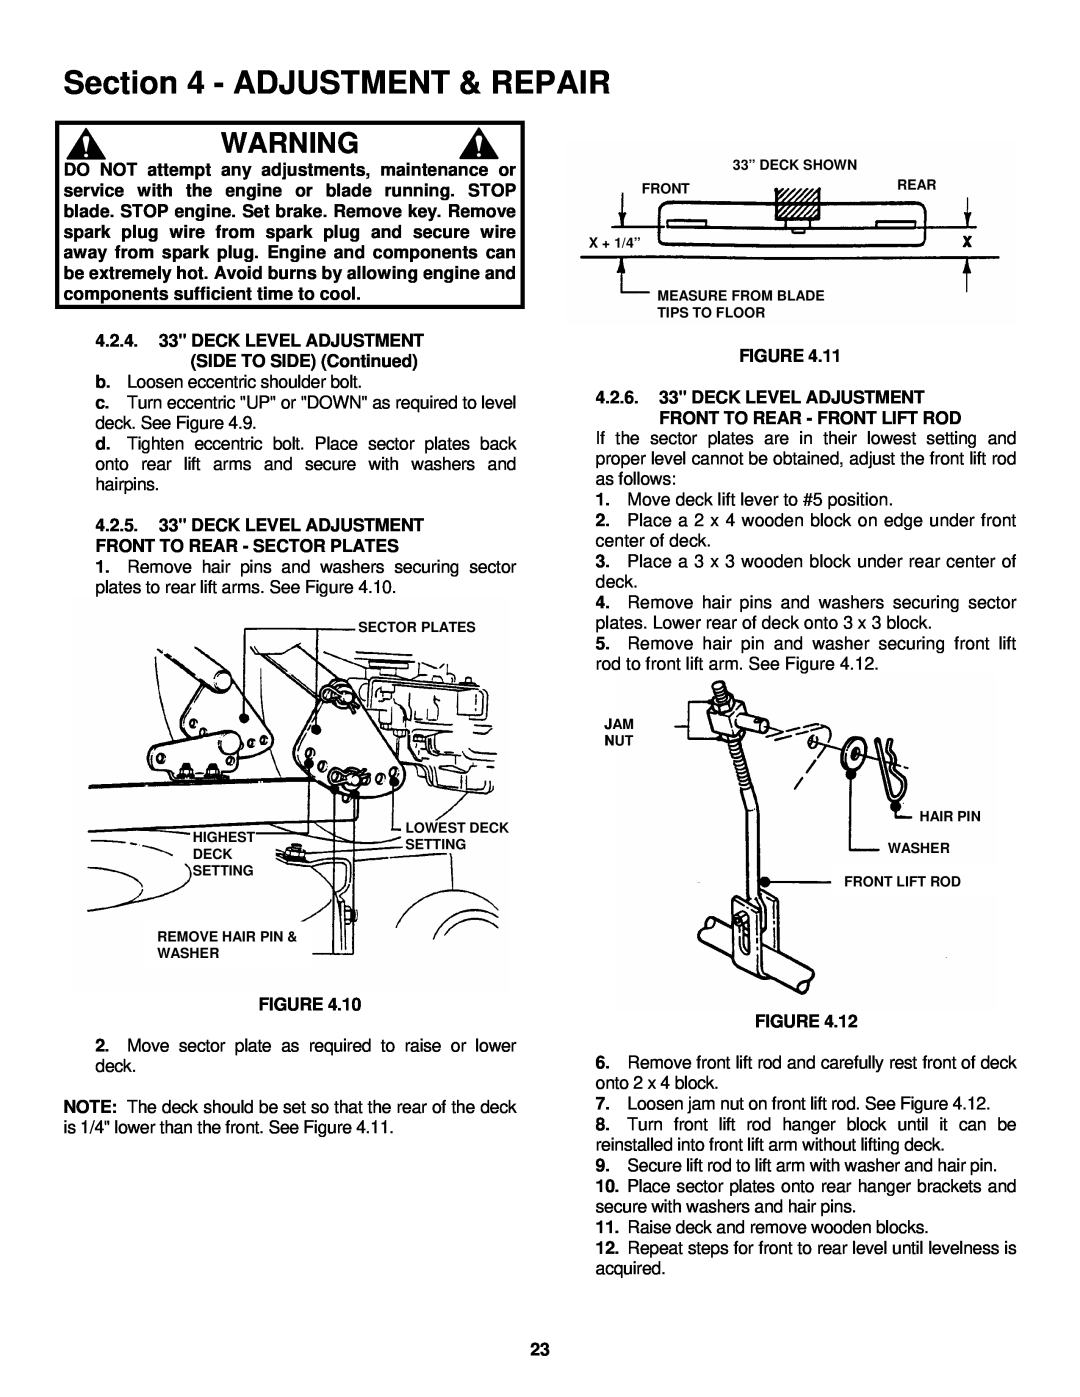 Snapper ELT180H33IBV Adjustment & Repair, Figure, 2.6.33 DECK LEVEL ADJUSTMENT, Front To Rear - Front Lift Rod 